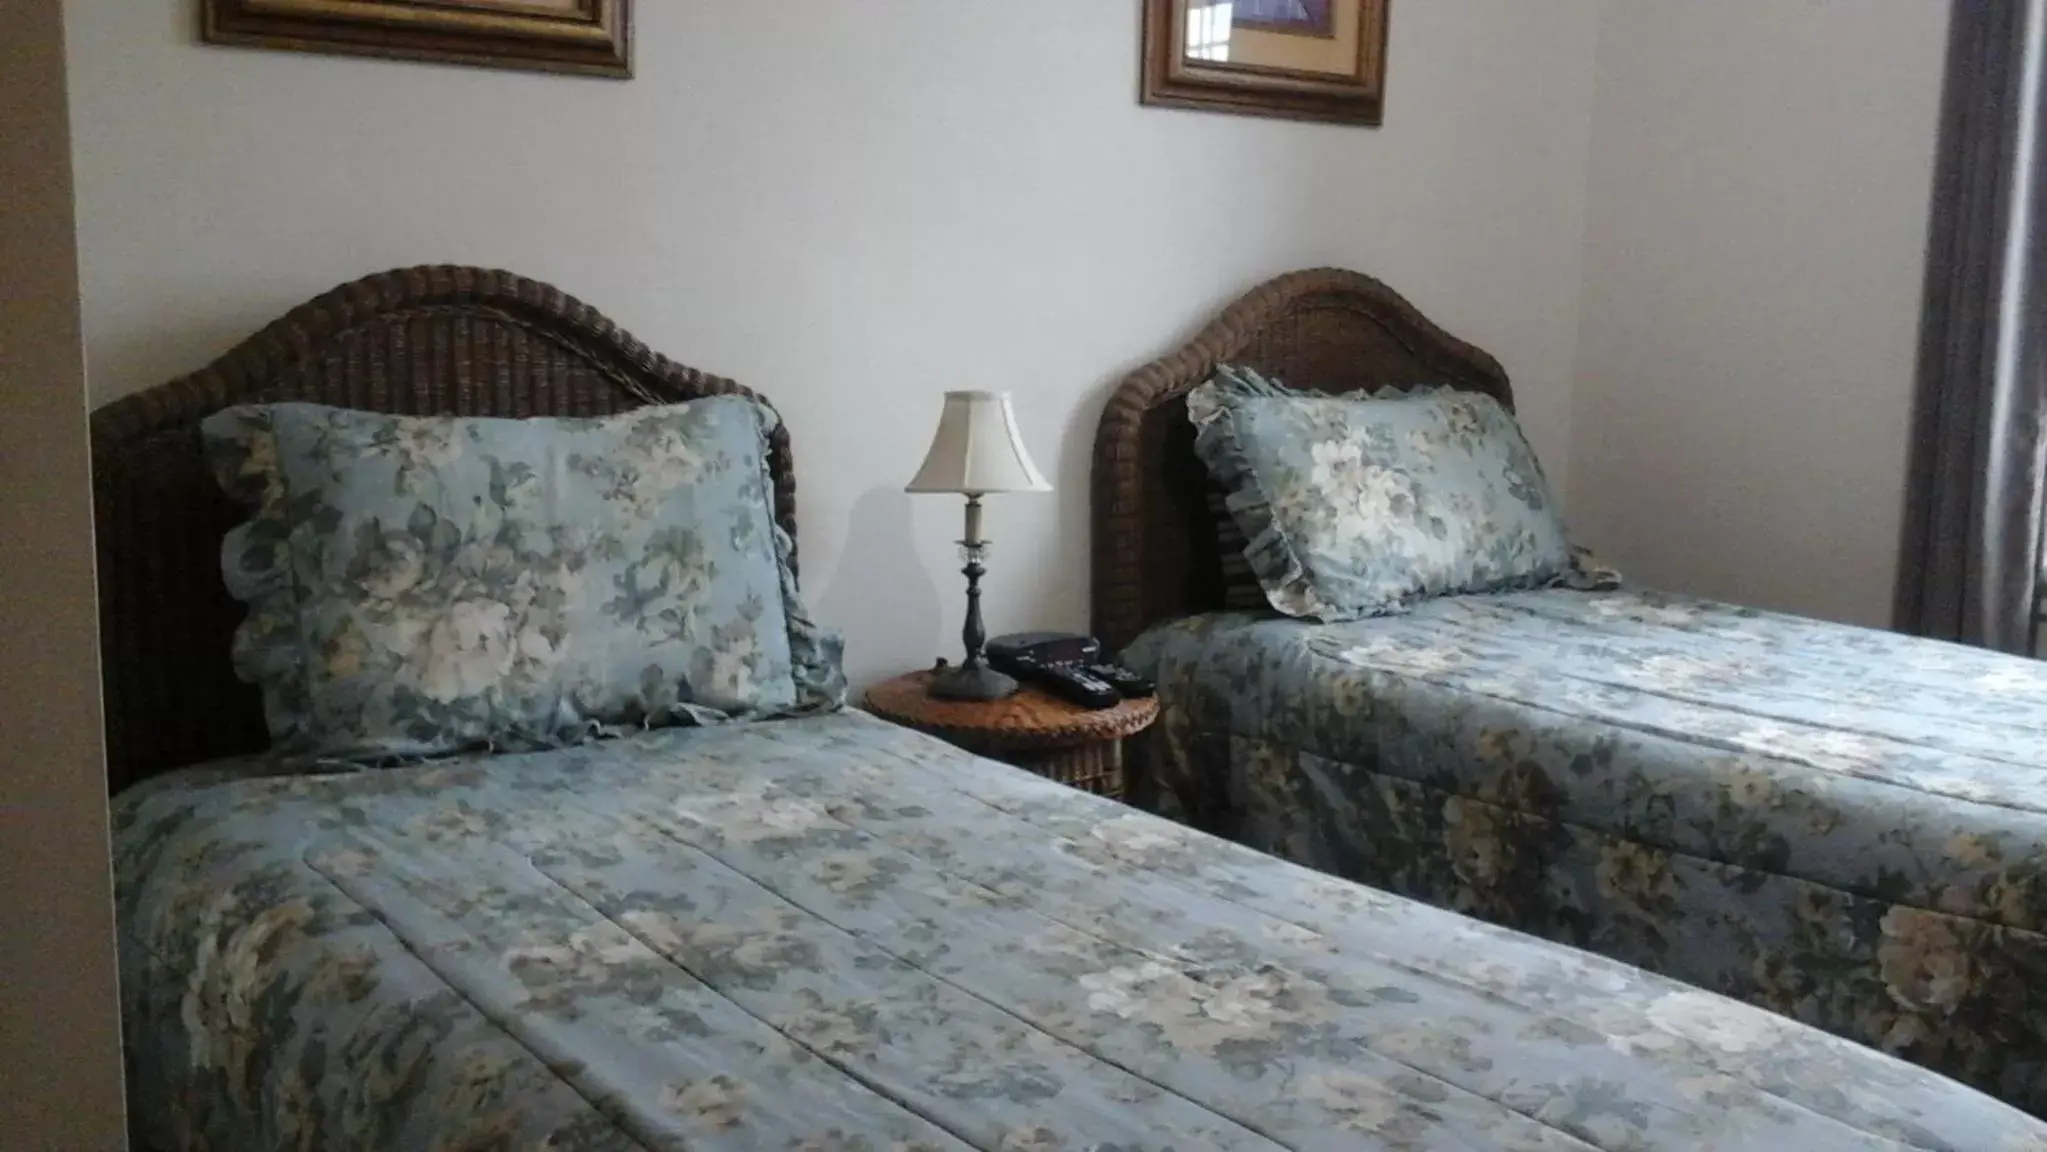 Bed in Baldachin Inn